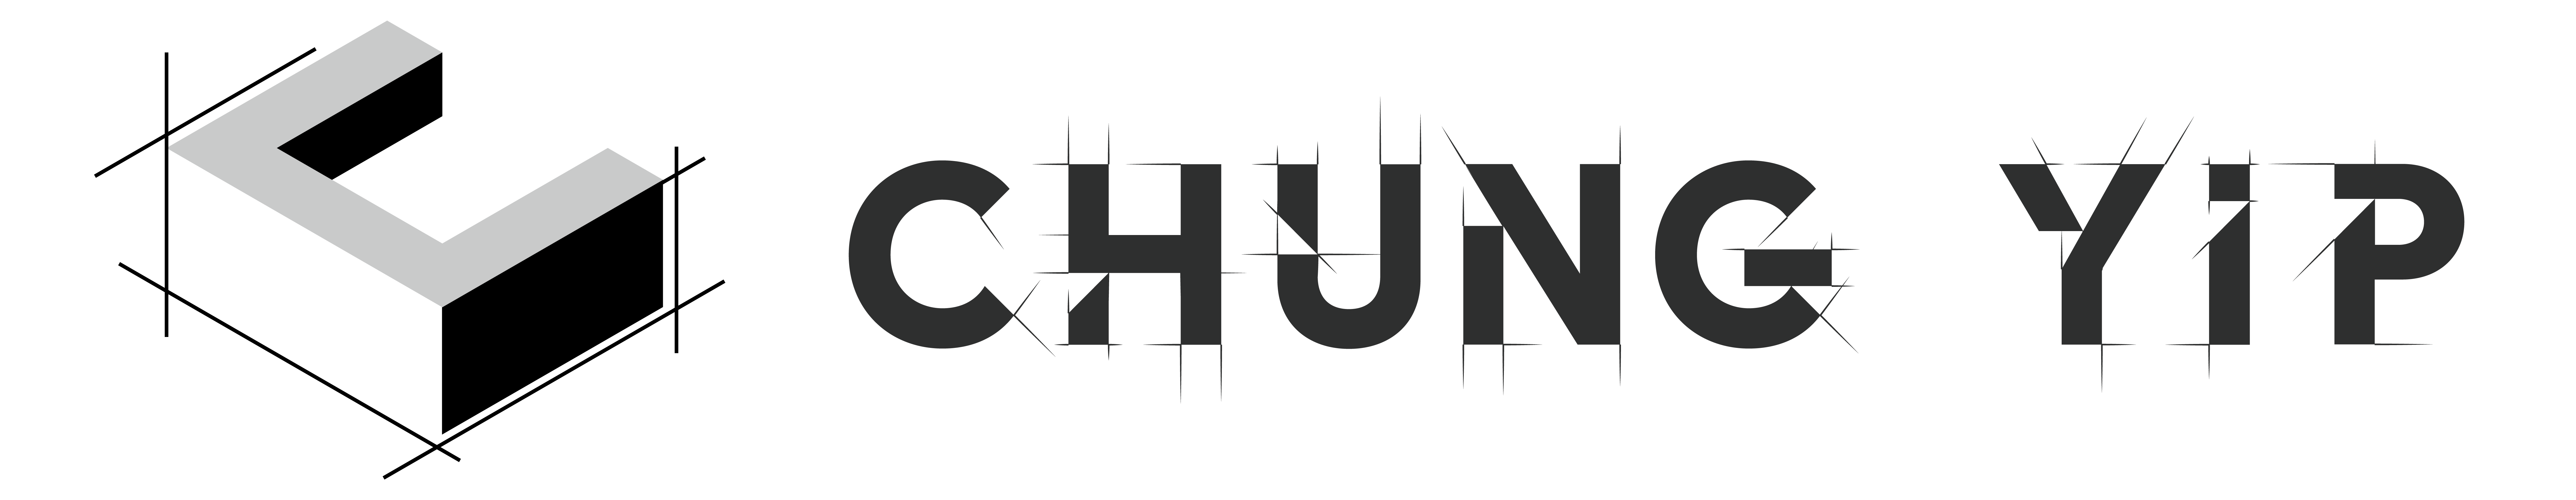 Chung Yip Logo Images